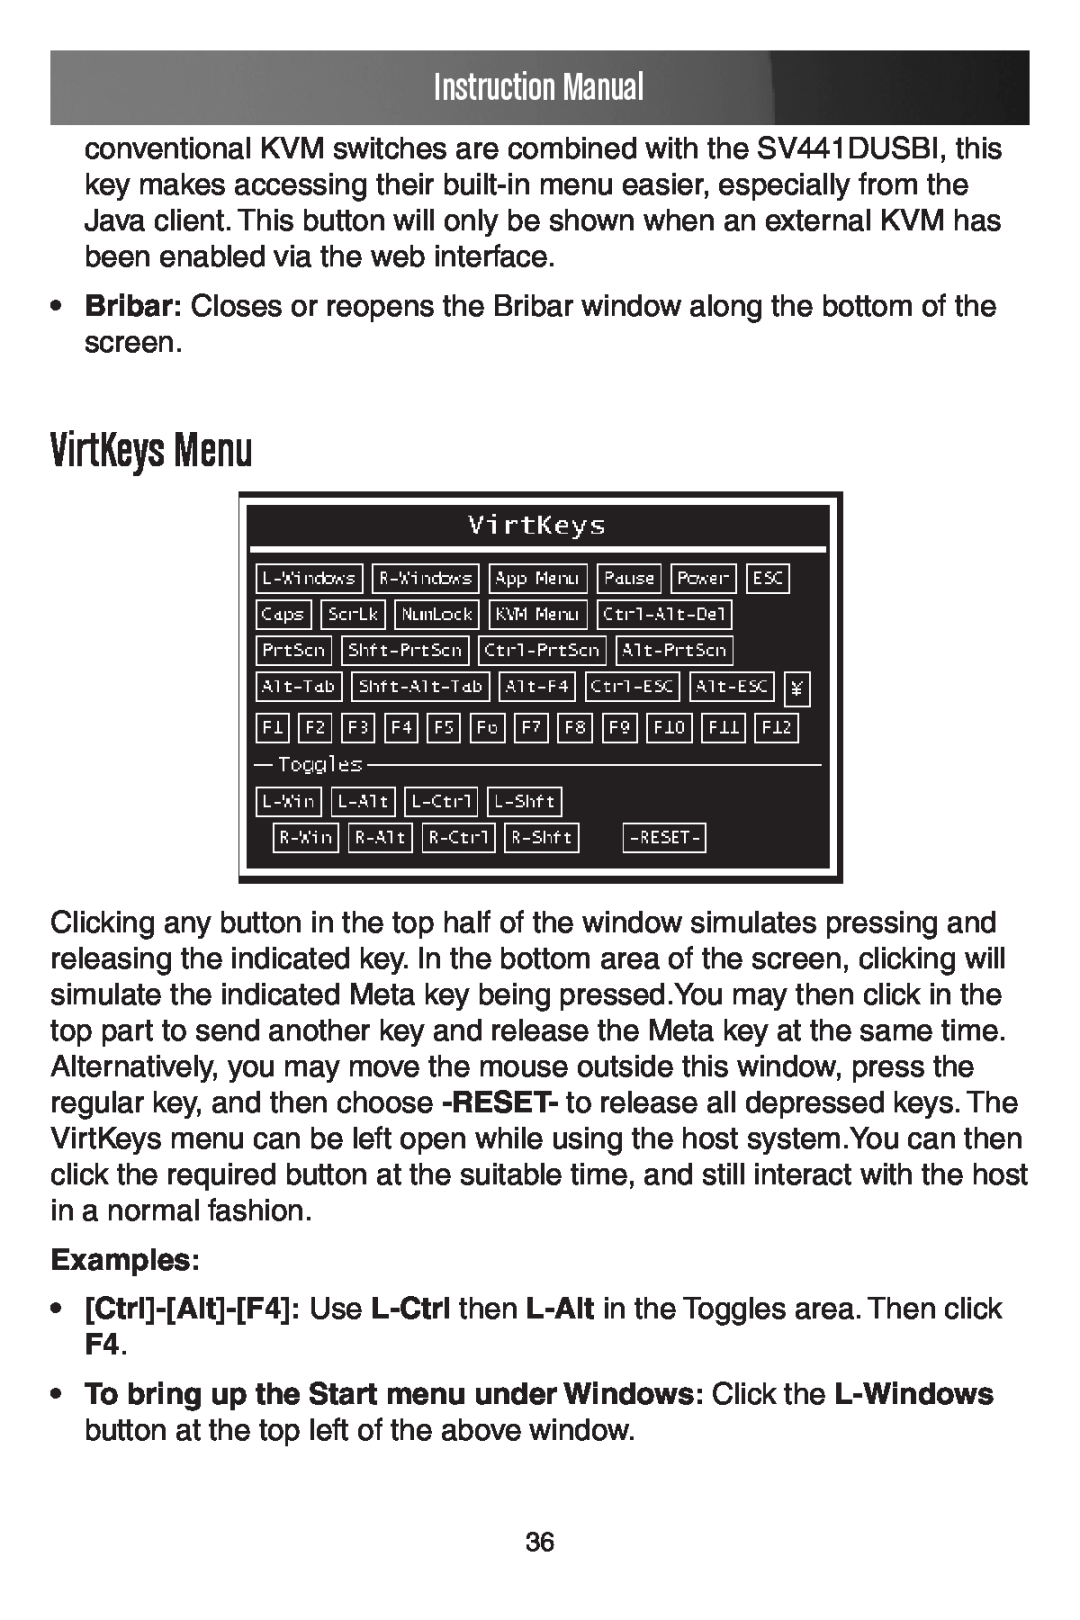 StarTech.com SV441DUSBI instruction manual VirtKeys Menu, Examples, Instruction Manual 